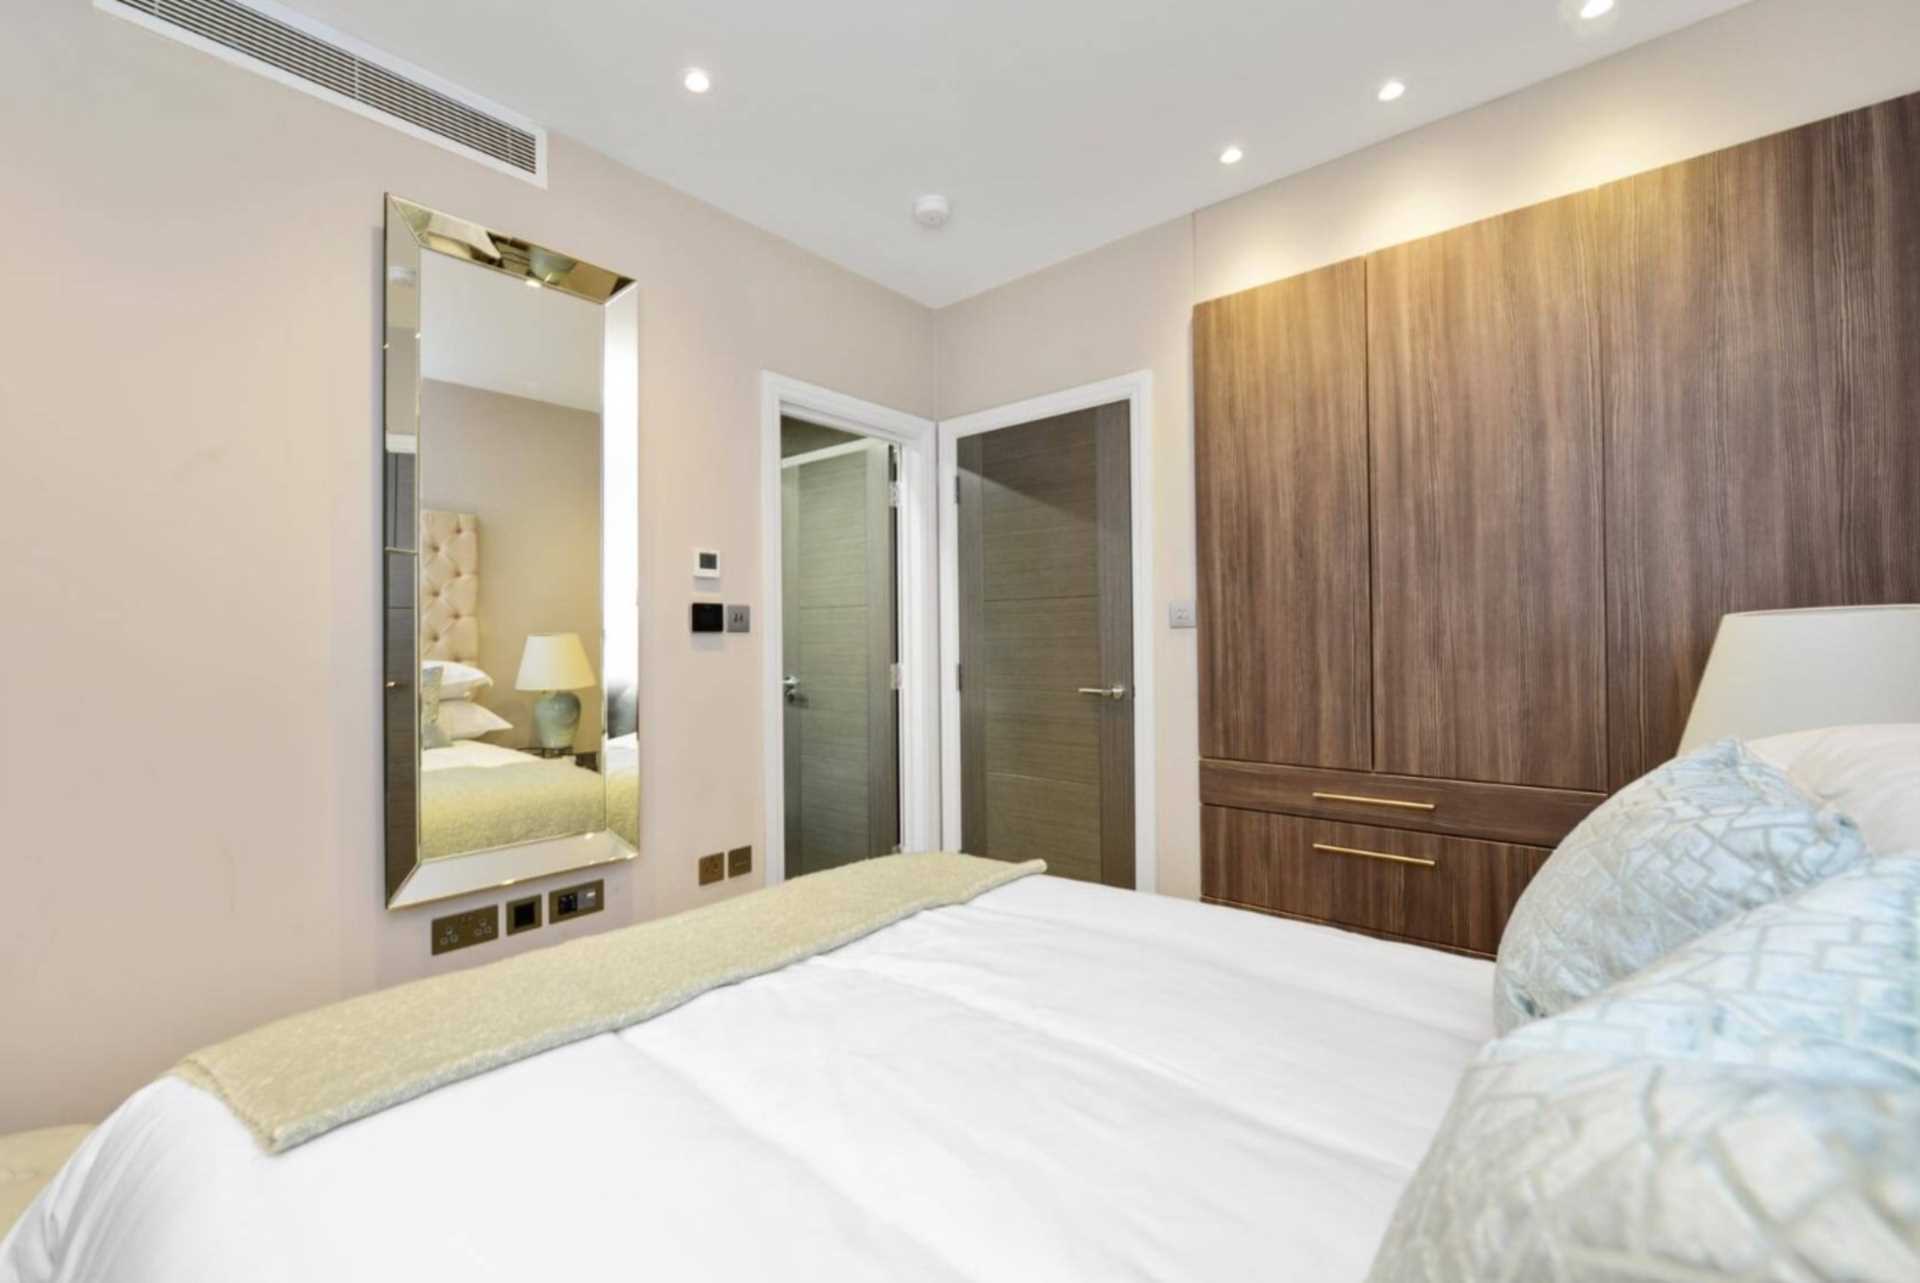 London NW3 5PB 2 bed flat rental property internal/external image-4